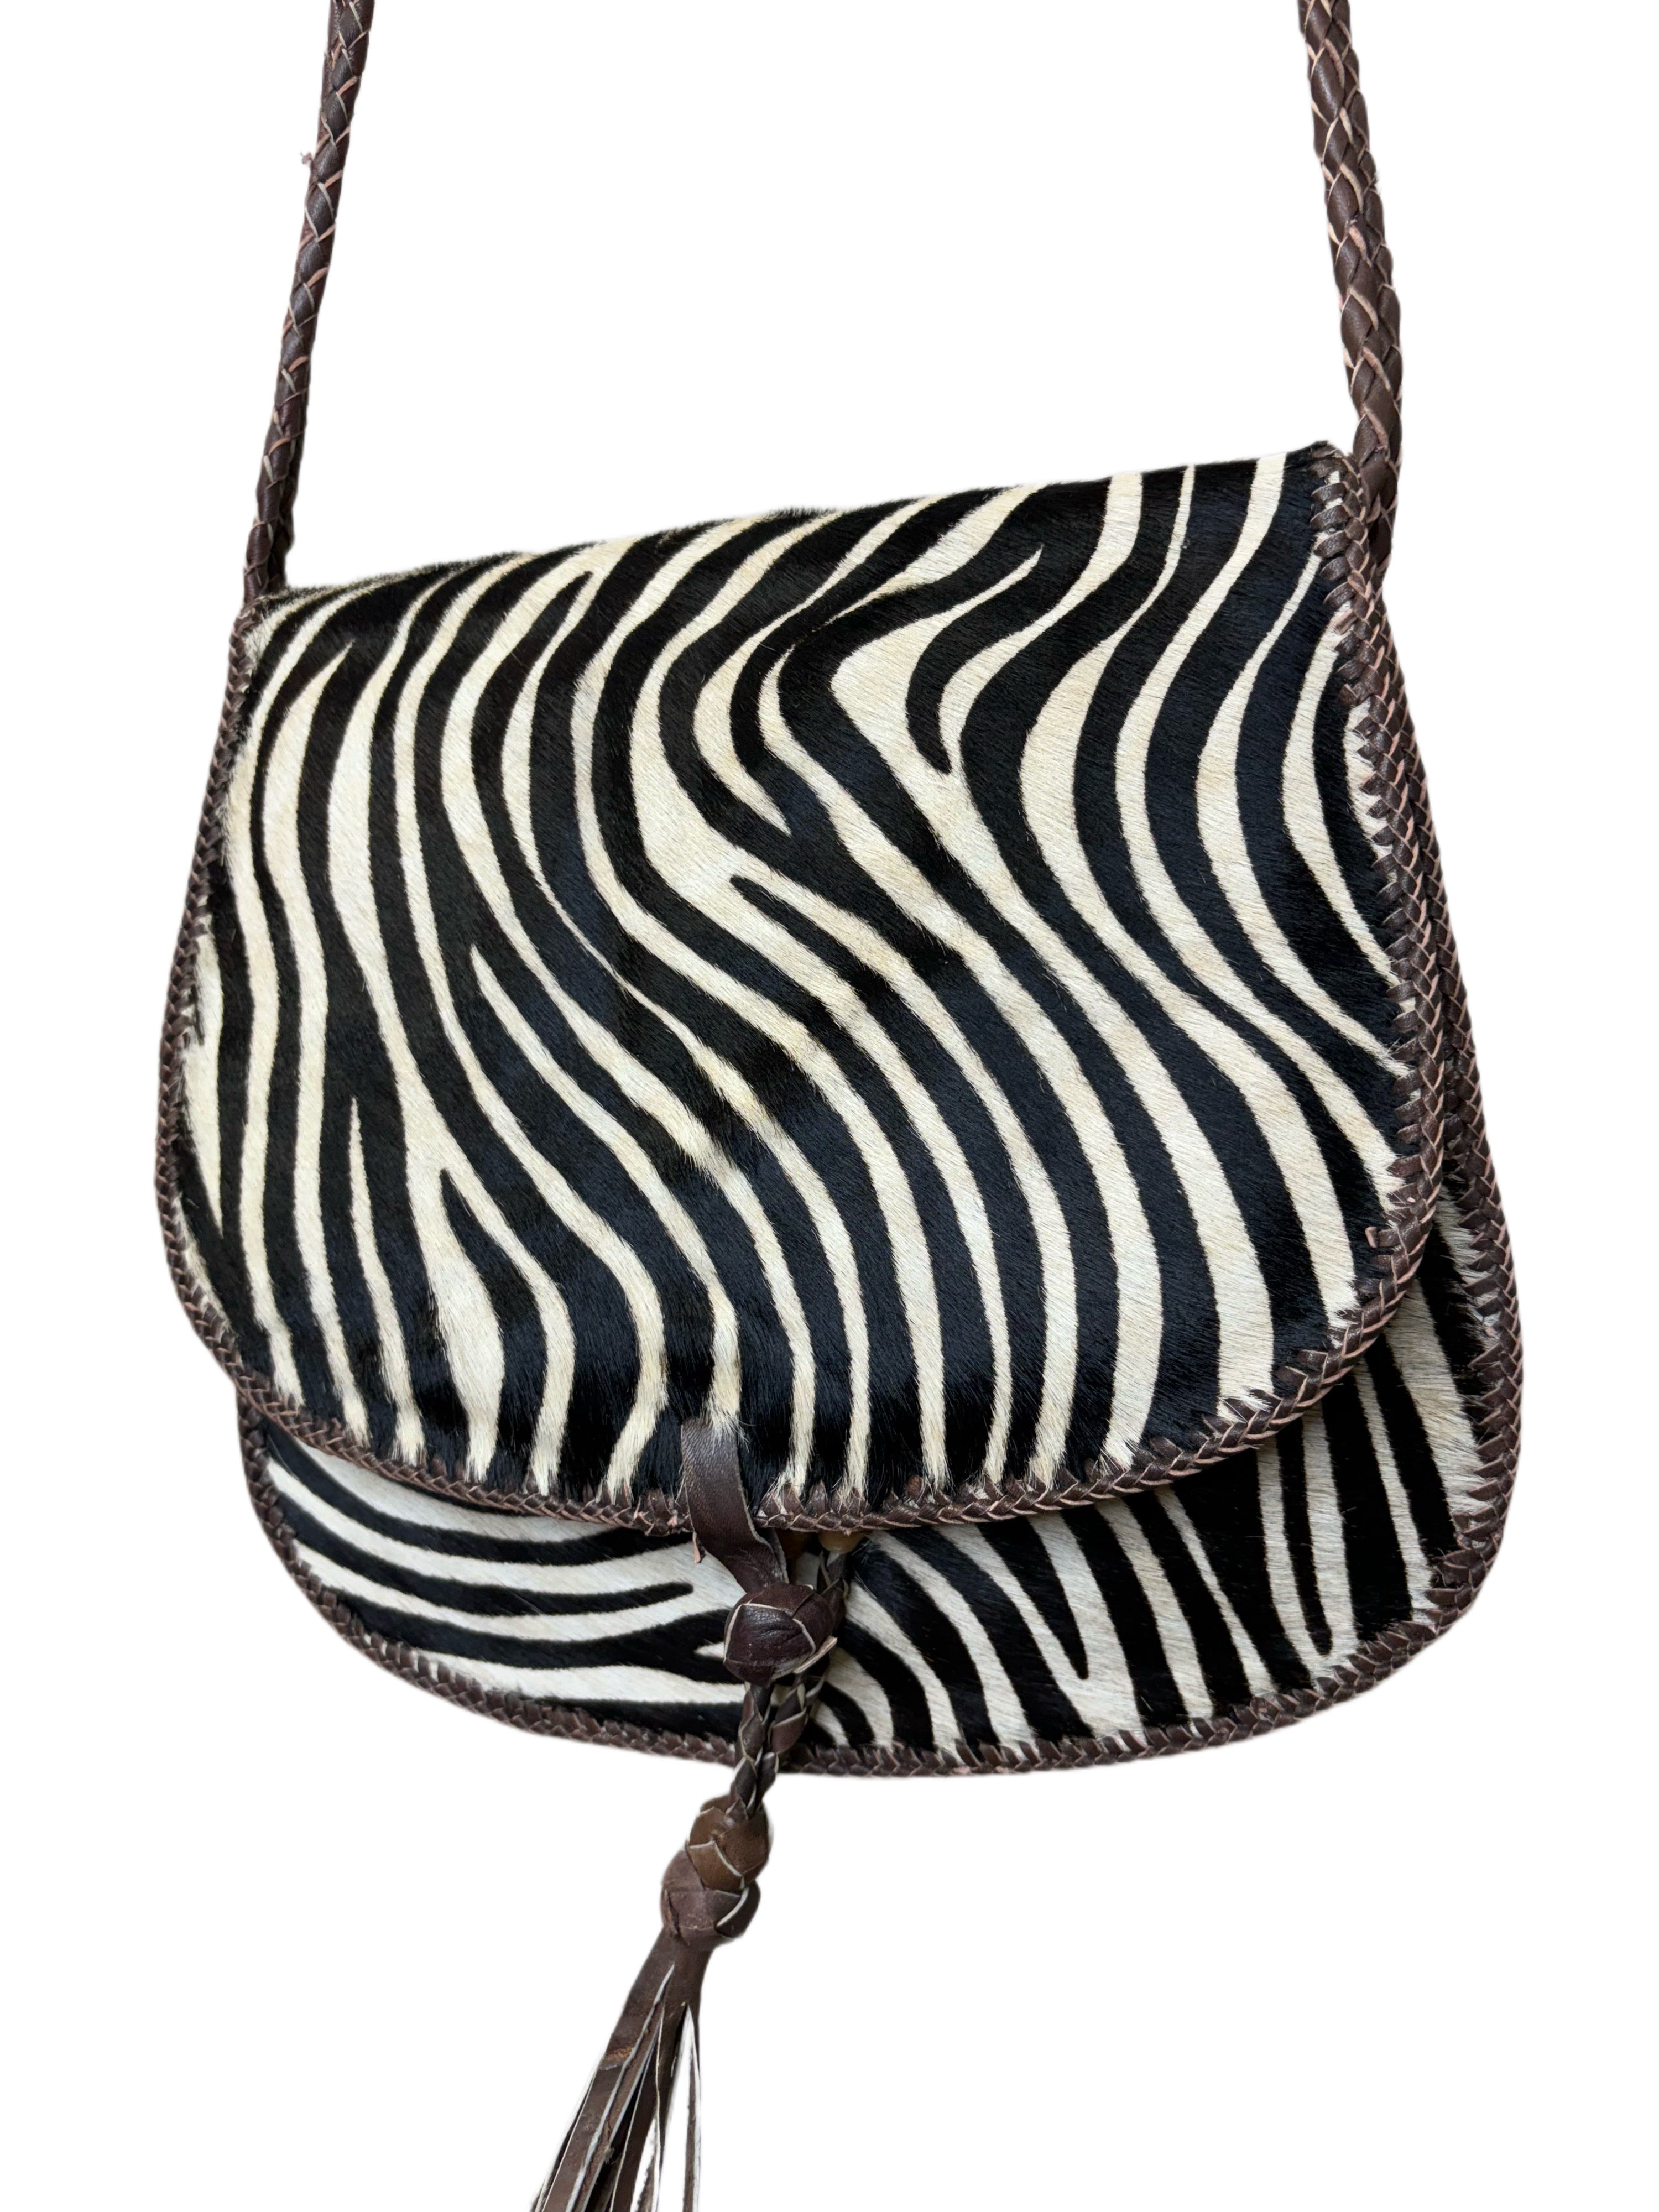 Handmade zebra purse